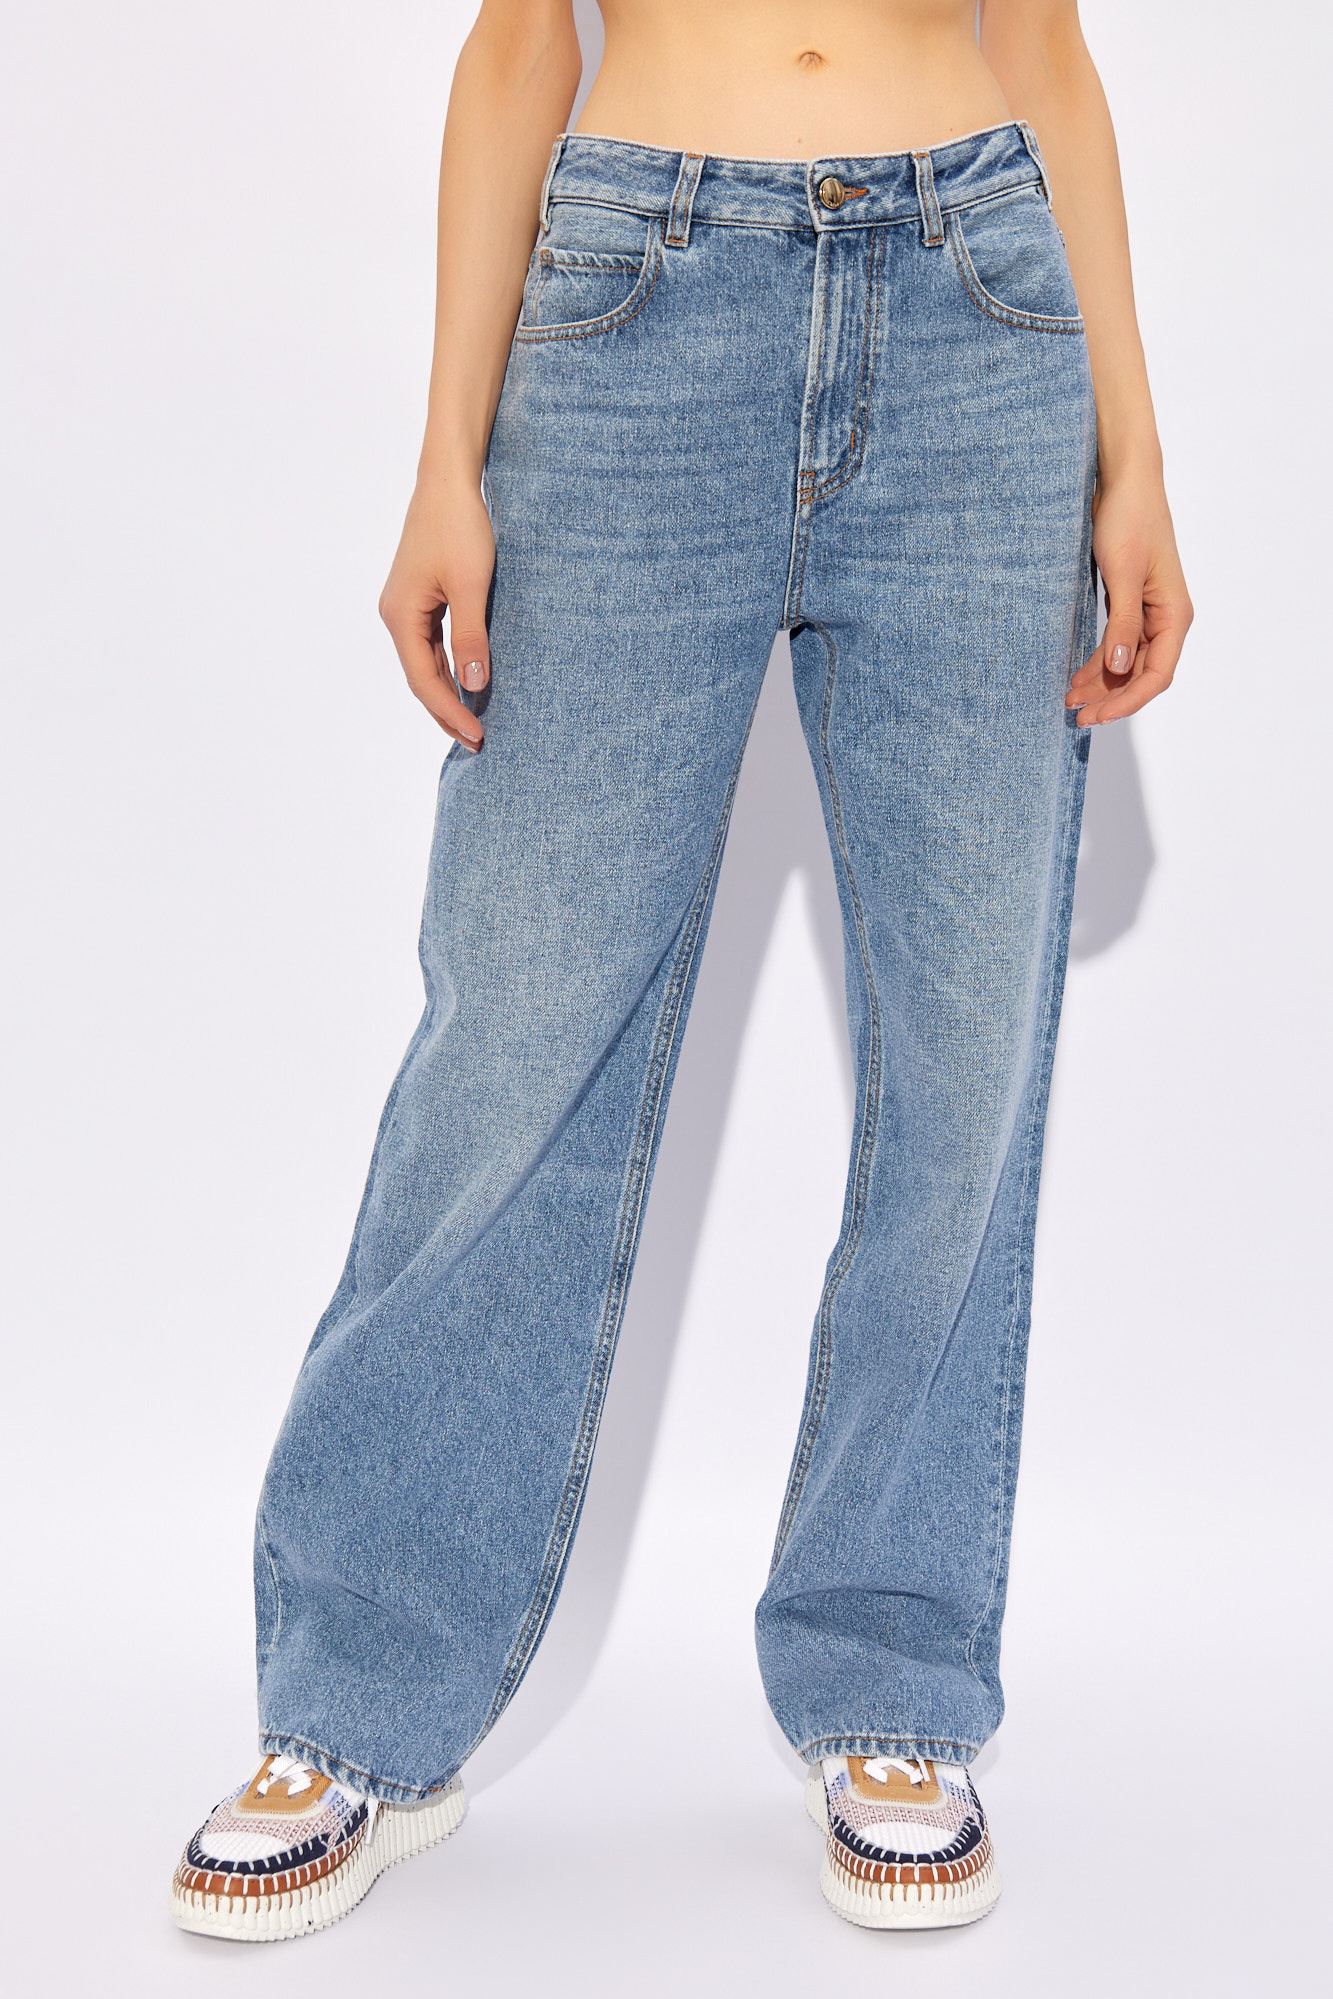 Simply Be Women's Chloe Skinny Jeans